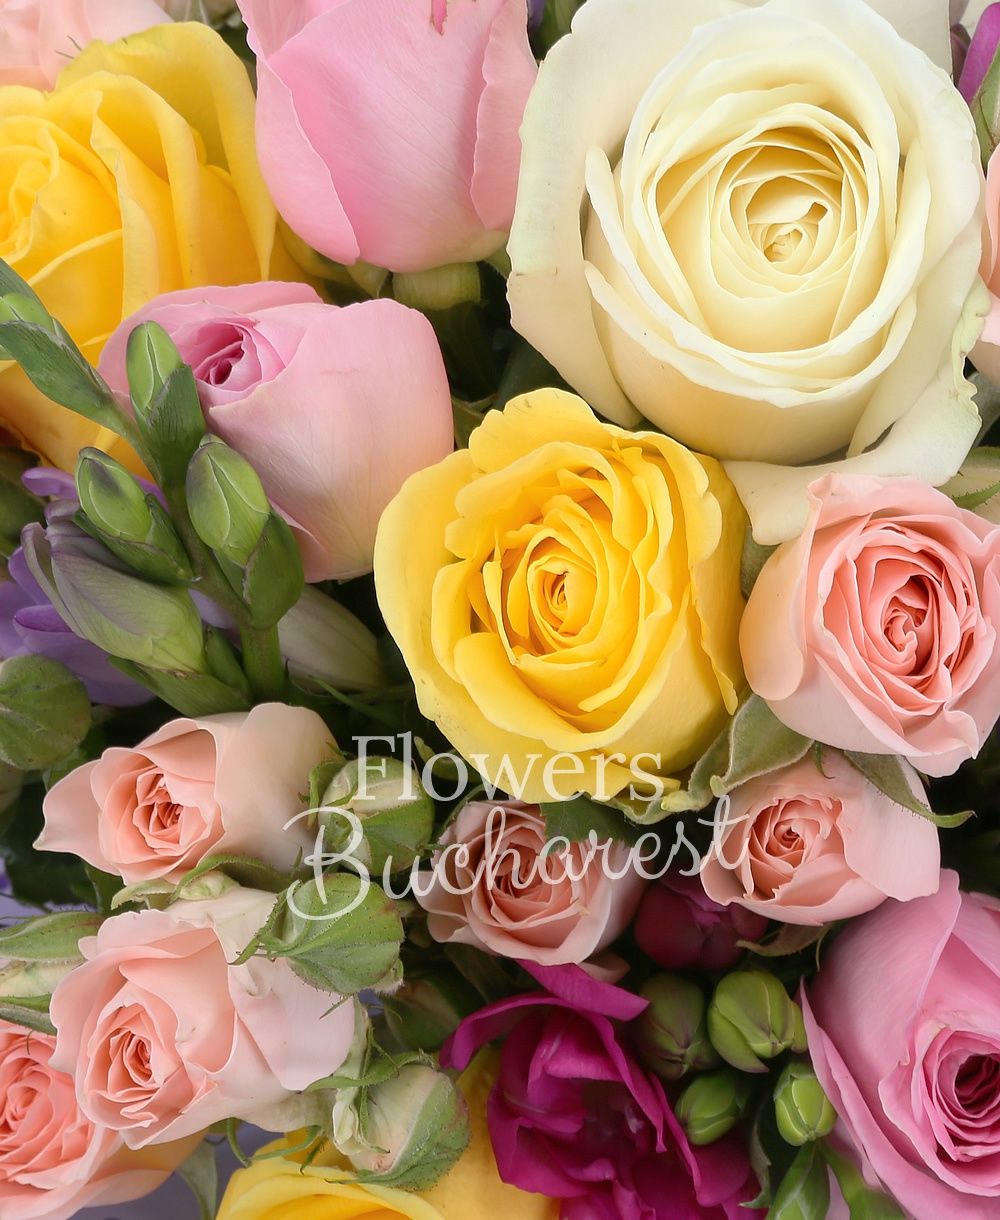 5 yellow roses, 4 white roses, 5 pink roses, 5 pink miniroses, 5 cyclam freesias, 5 mauve freesias